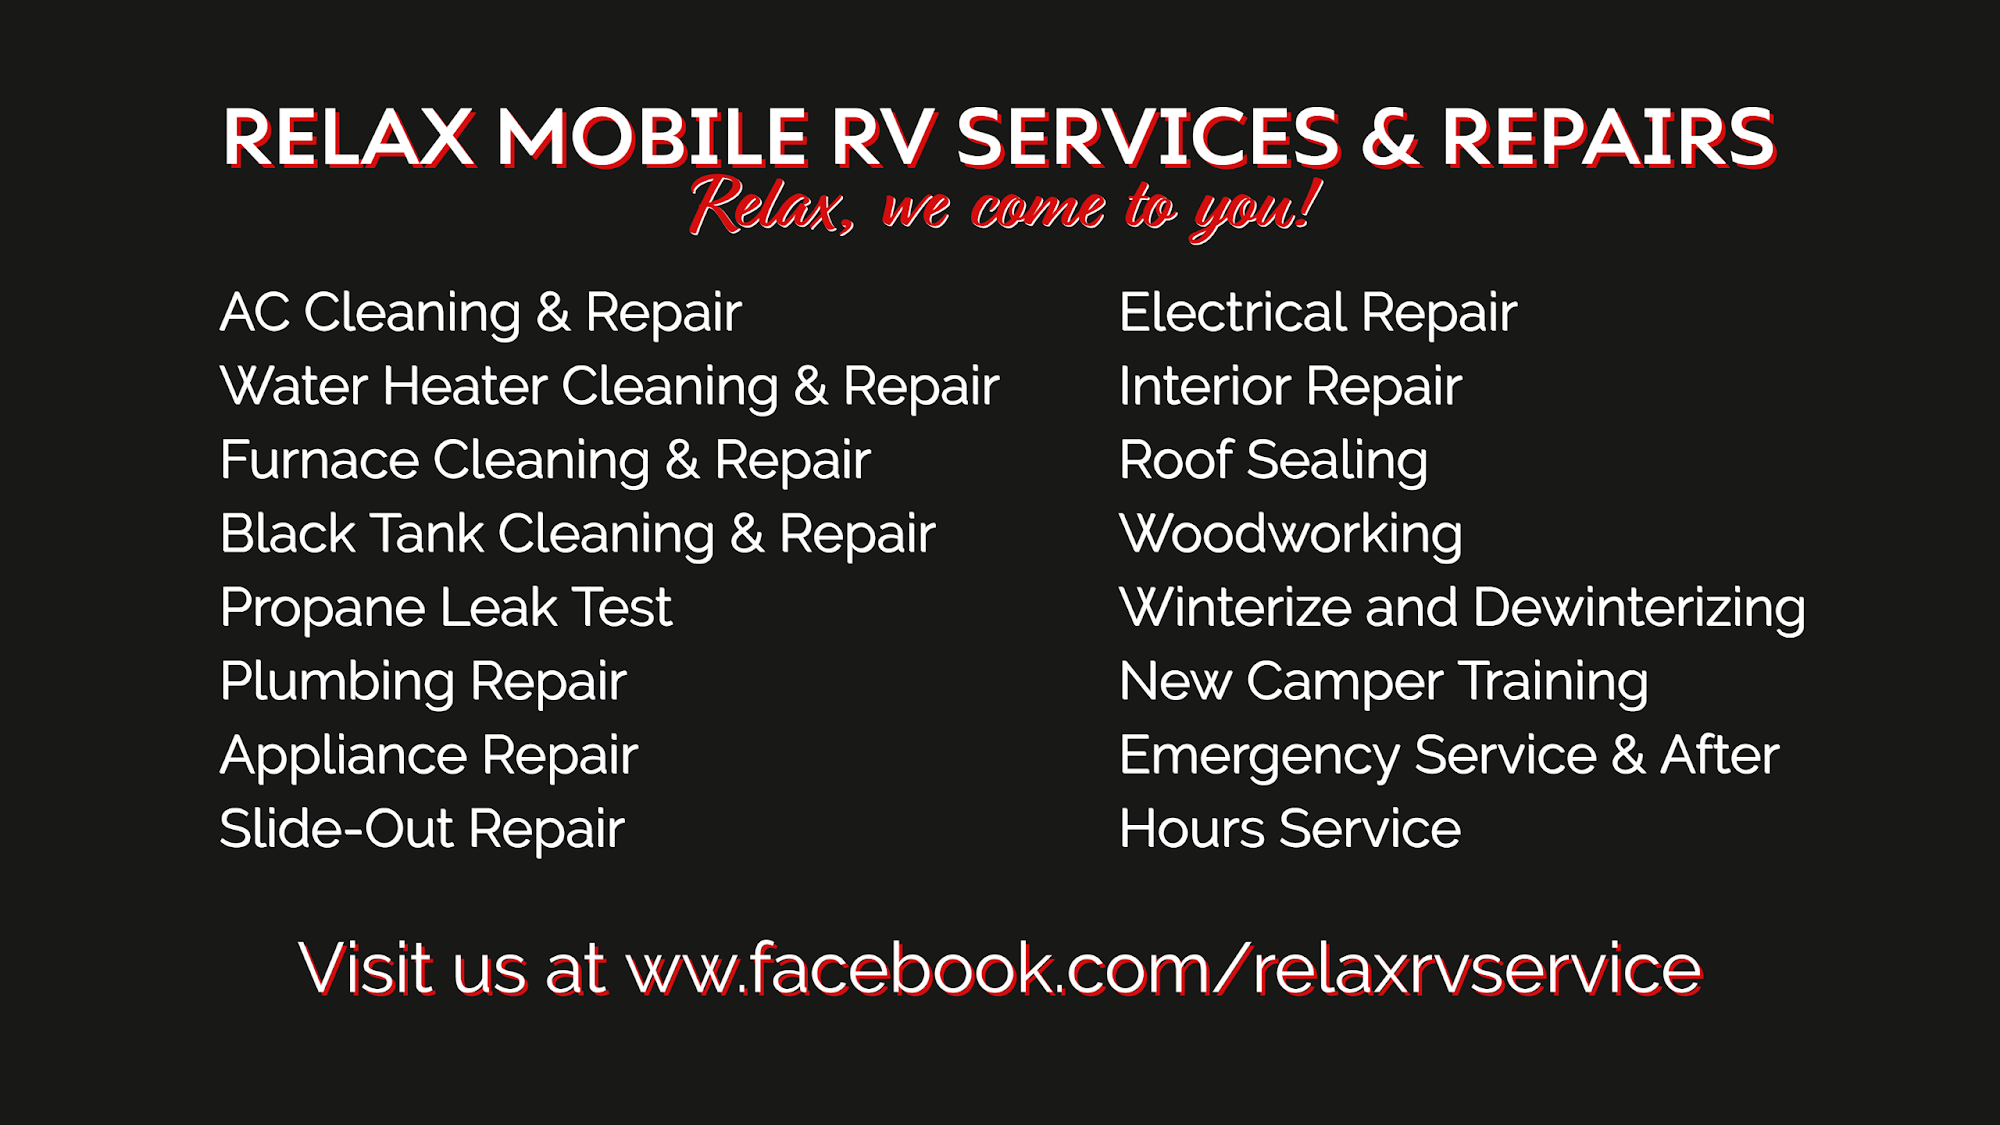 RELAX MOBILE RV SERVICE, LLC 132 Oklahoma Ave, Hewitt Texas 76643